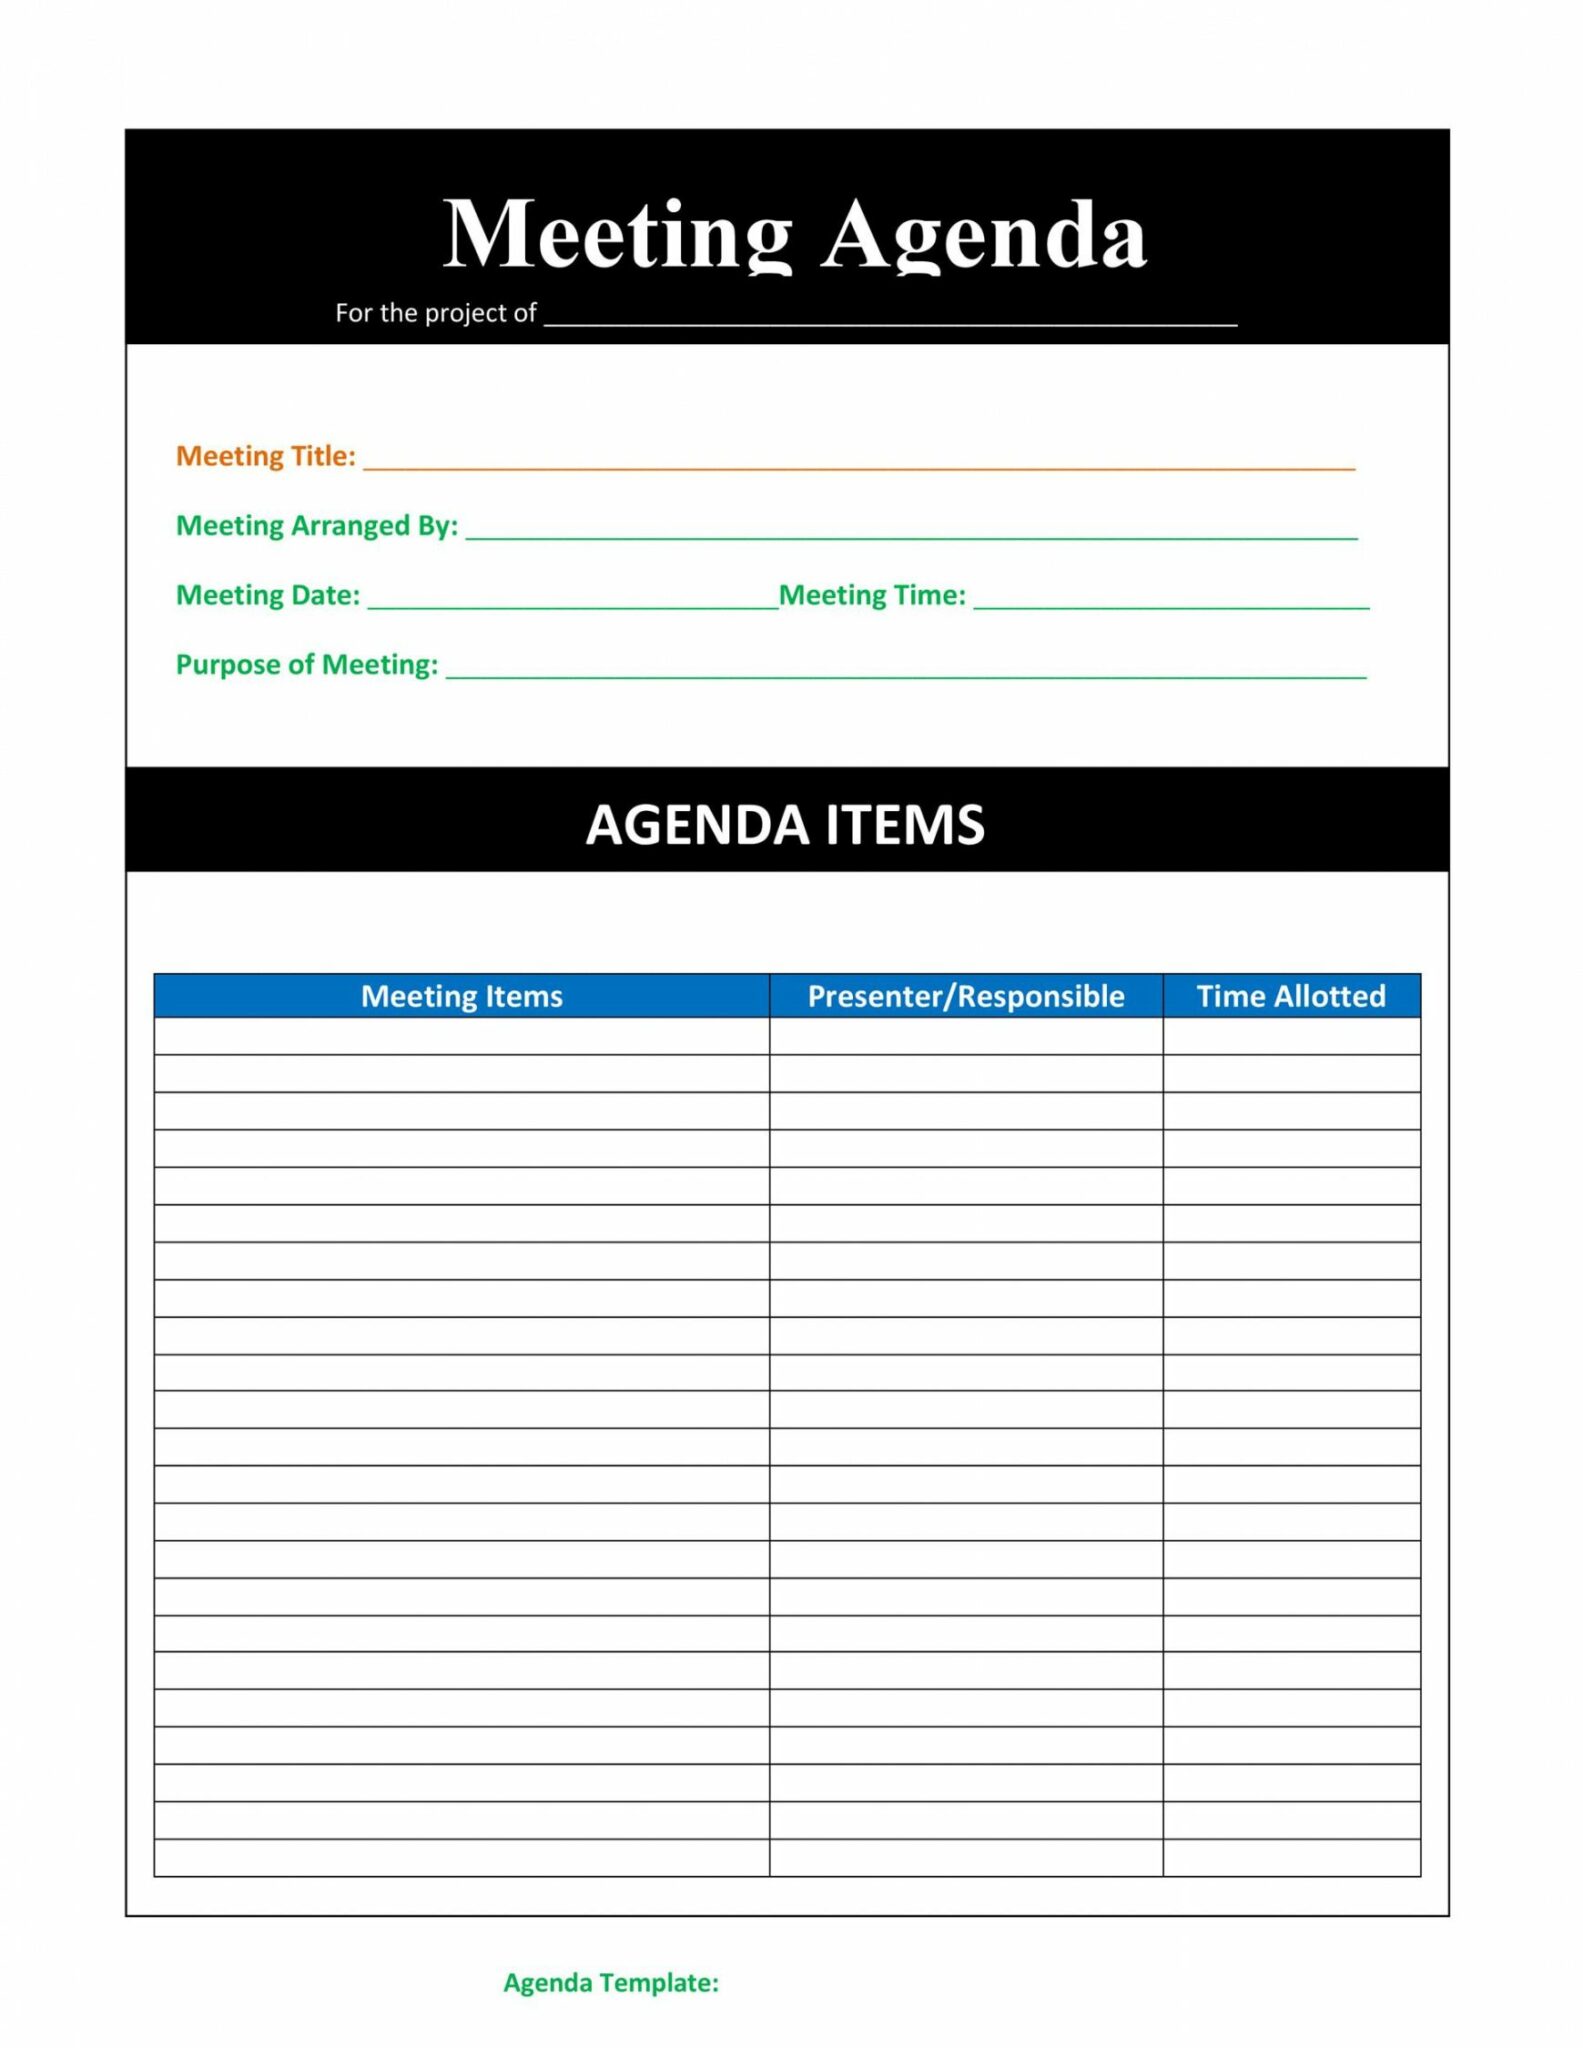 sample-46-effective-meeting-agenda-templates-templatelab-word-agenda-template-free-download